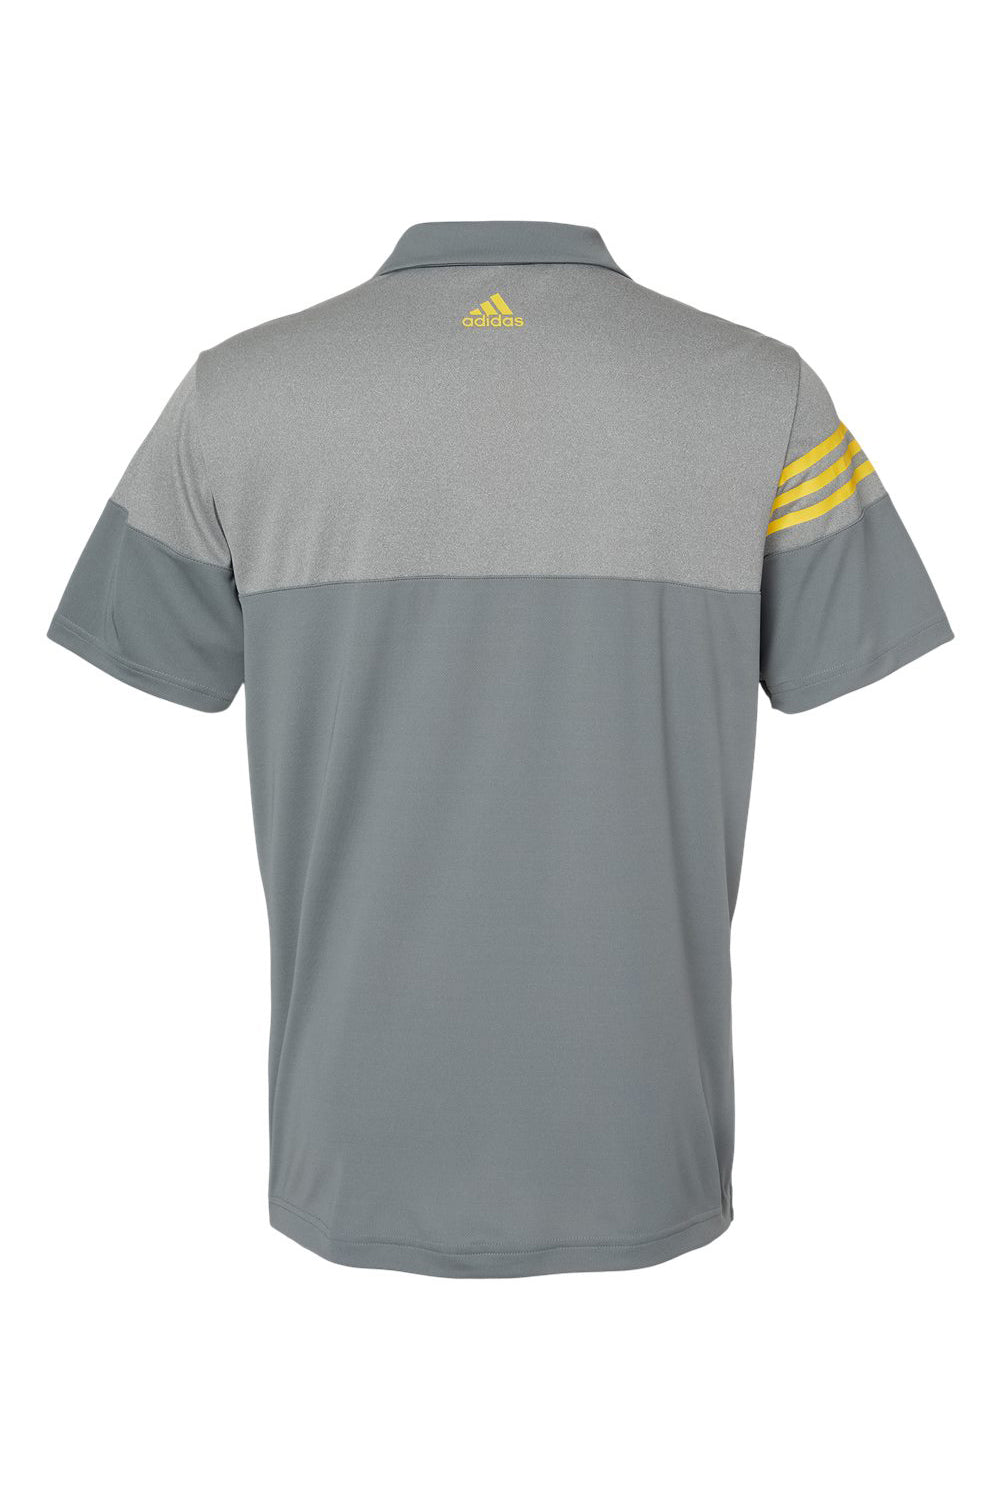 Adidas A213 Mens 3 Stripes Colorblock Moisture Wicking Short Sleeve Polo Shirt Vista Grey/Yellow Flat Back